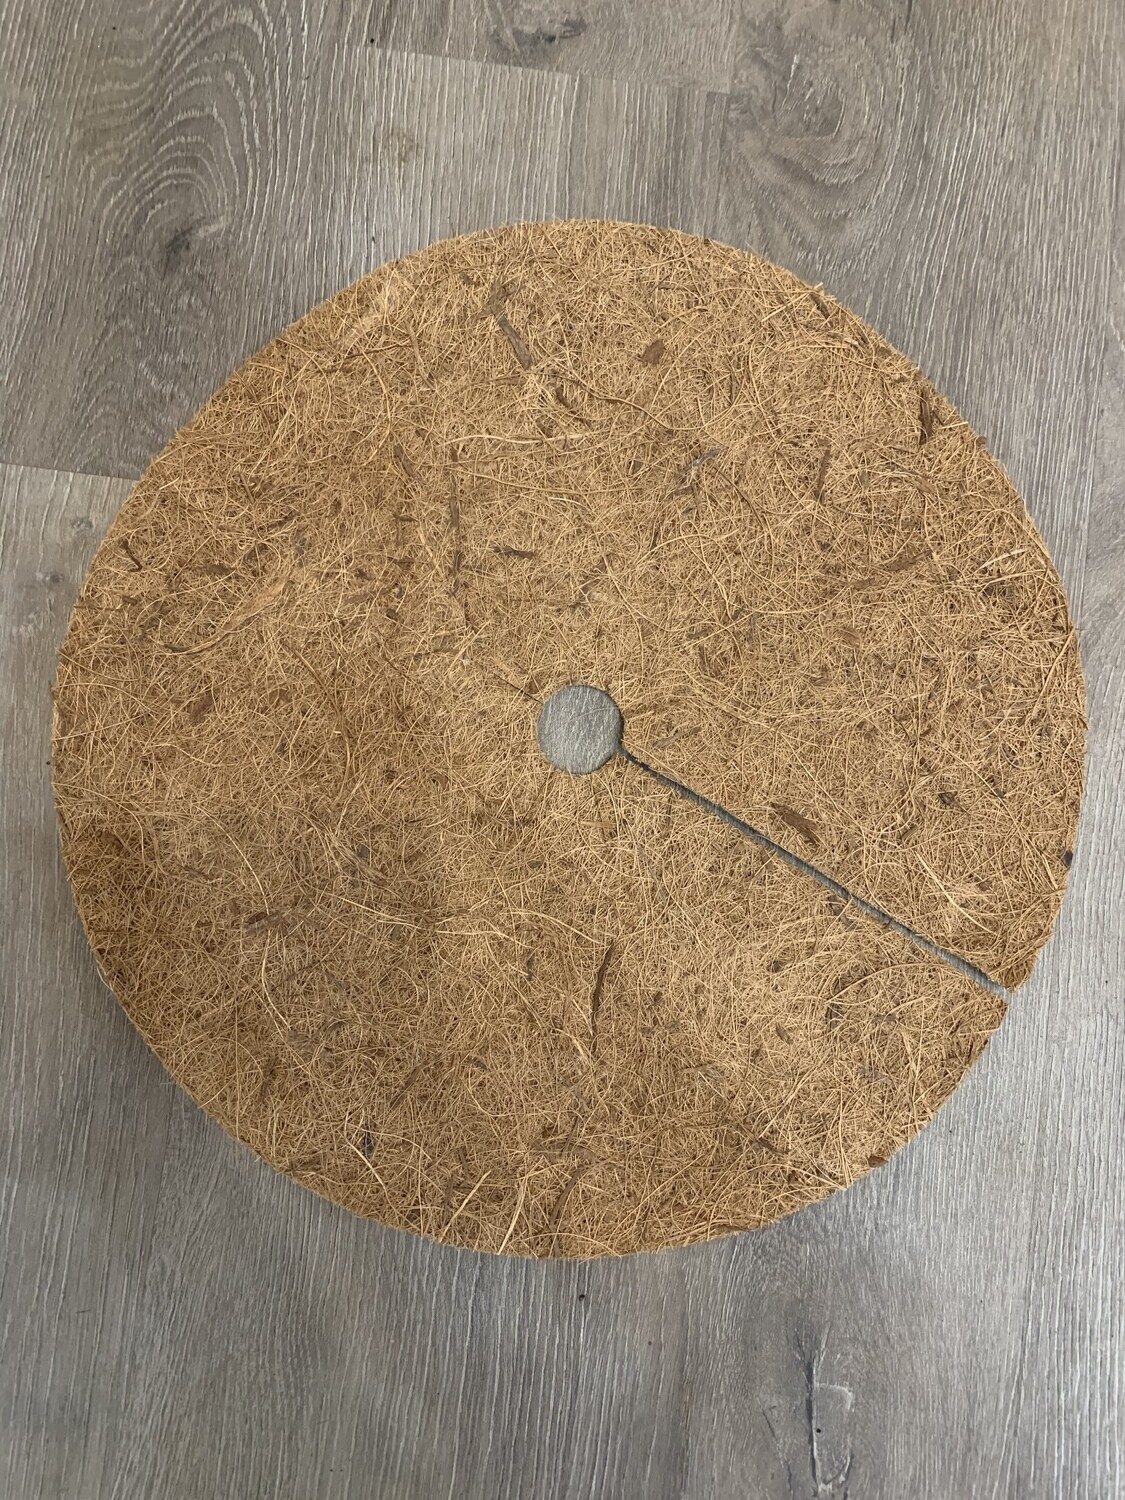 Natural coir (coconut fiber) mulch ring